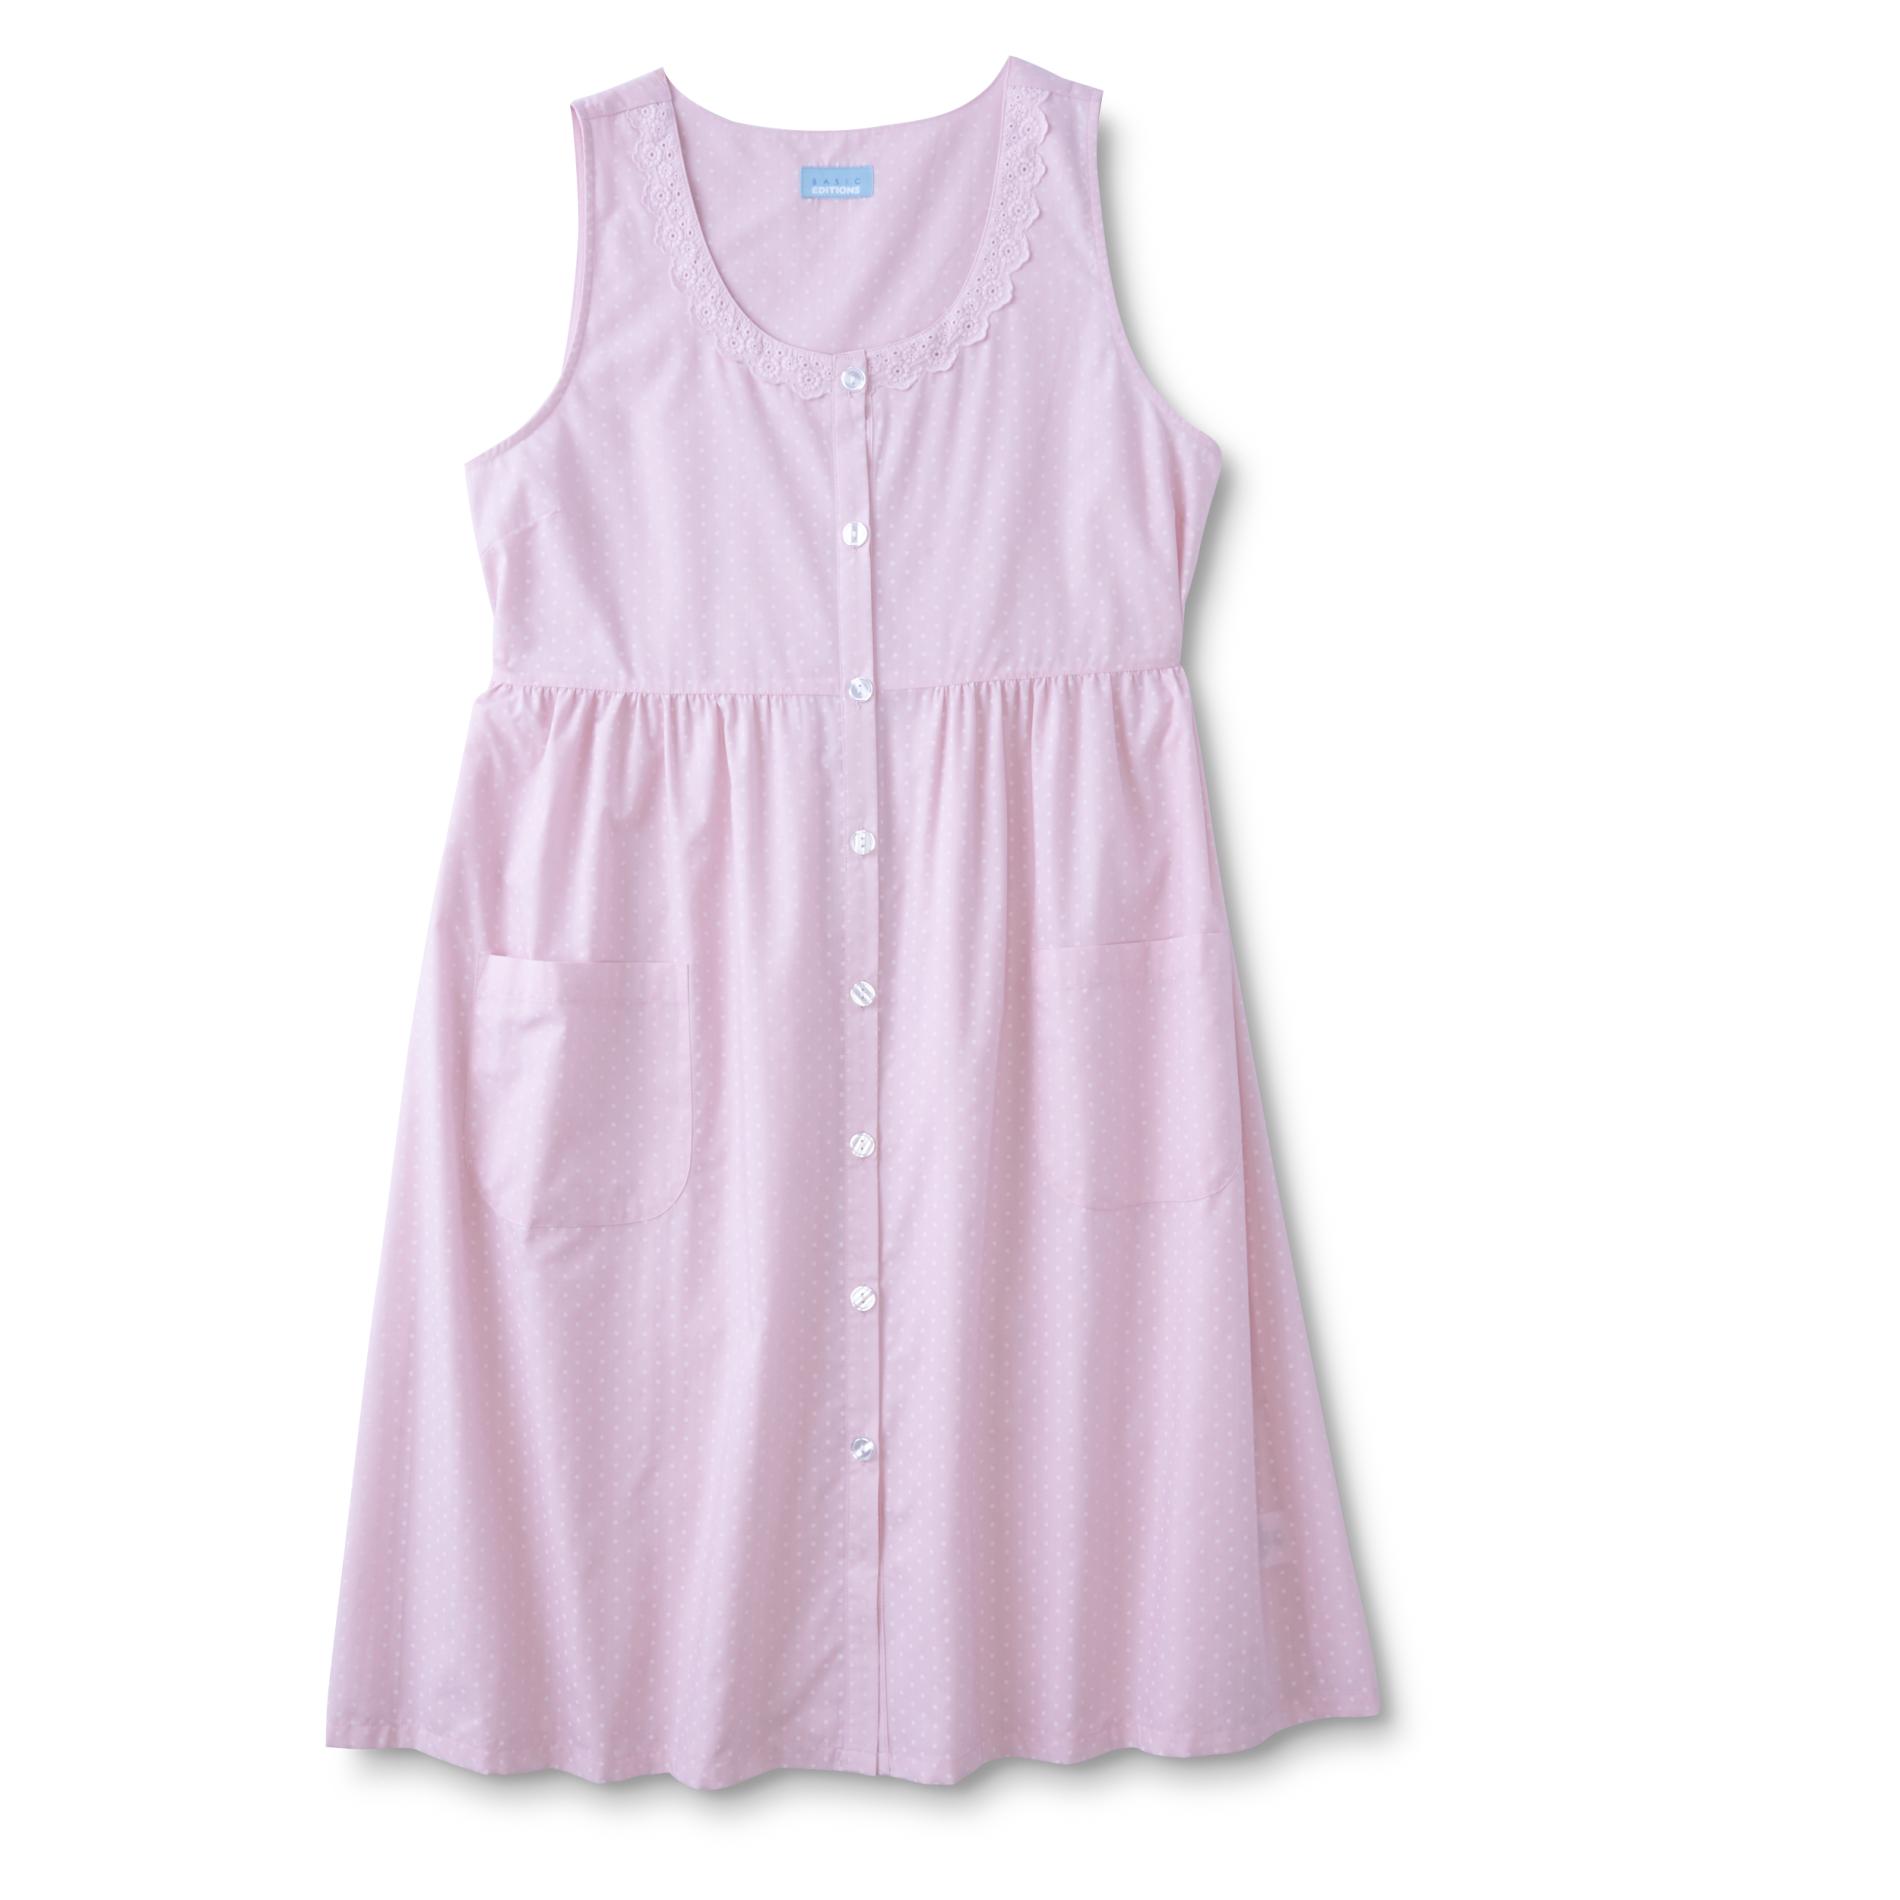 Basic Editions Women's Sleeveless Nightgown - Dots